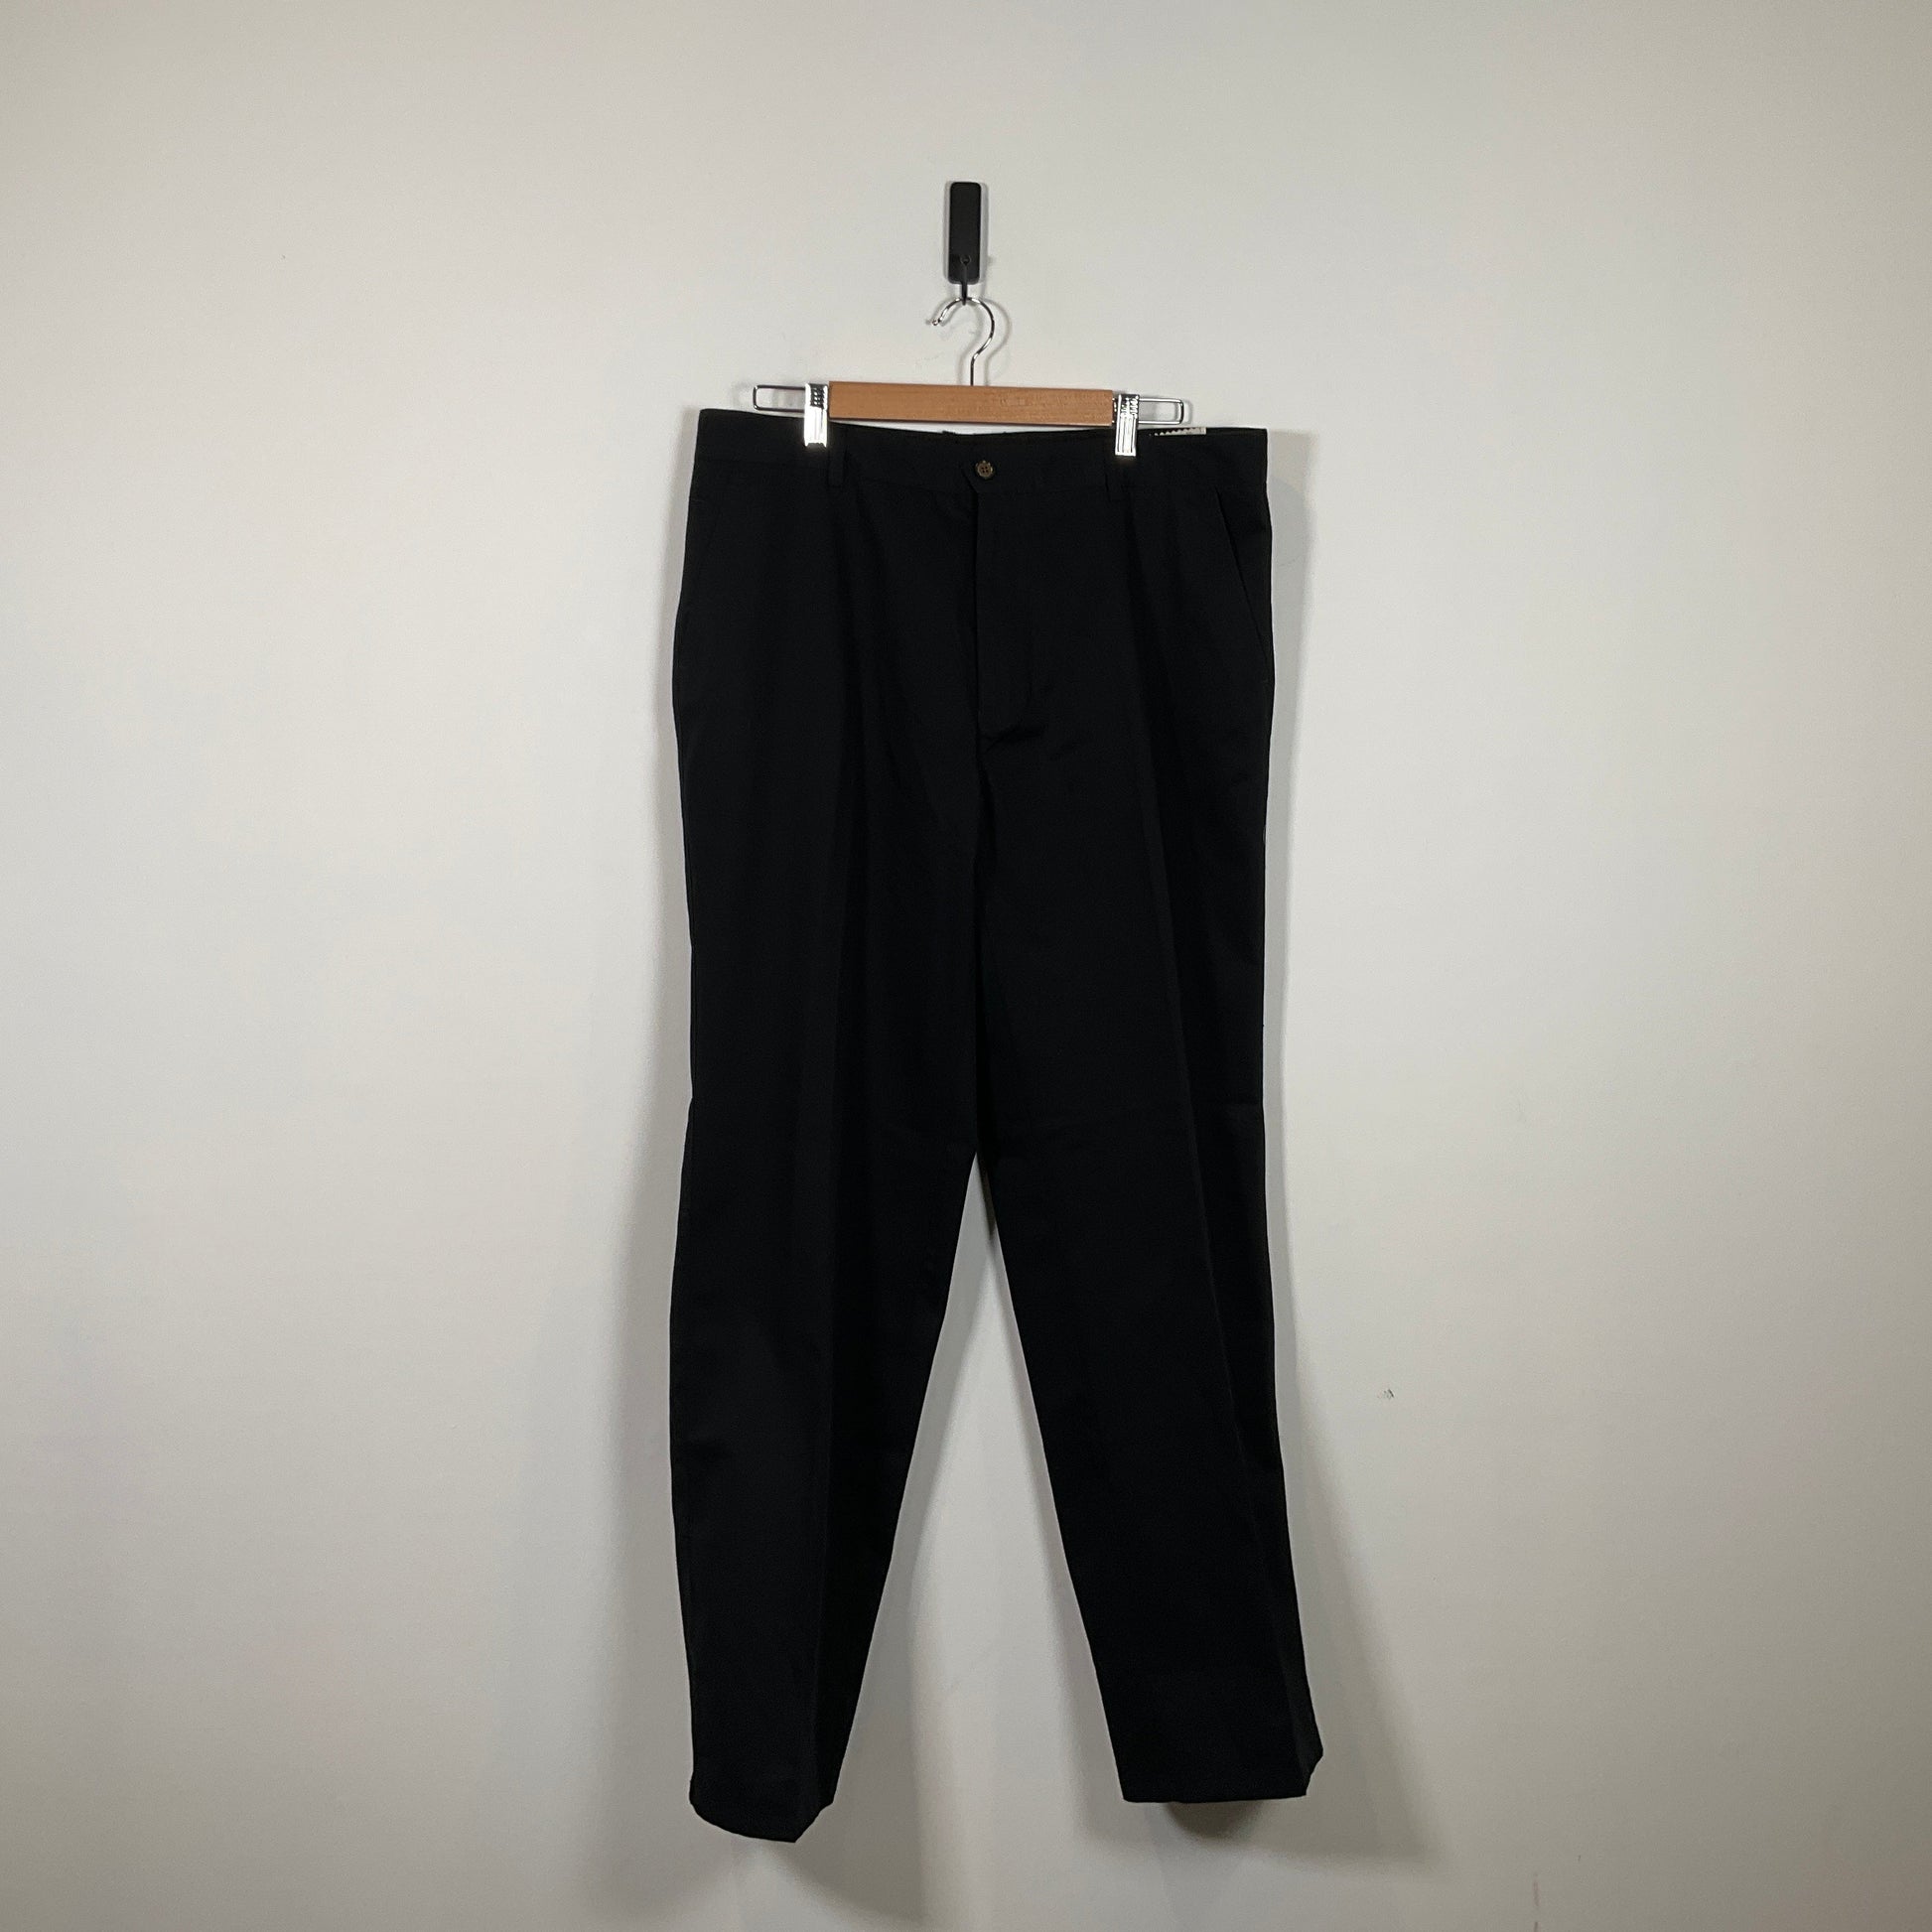 Liulangdaishu - Jeans Pants